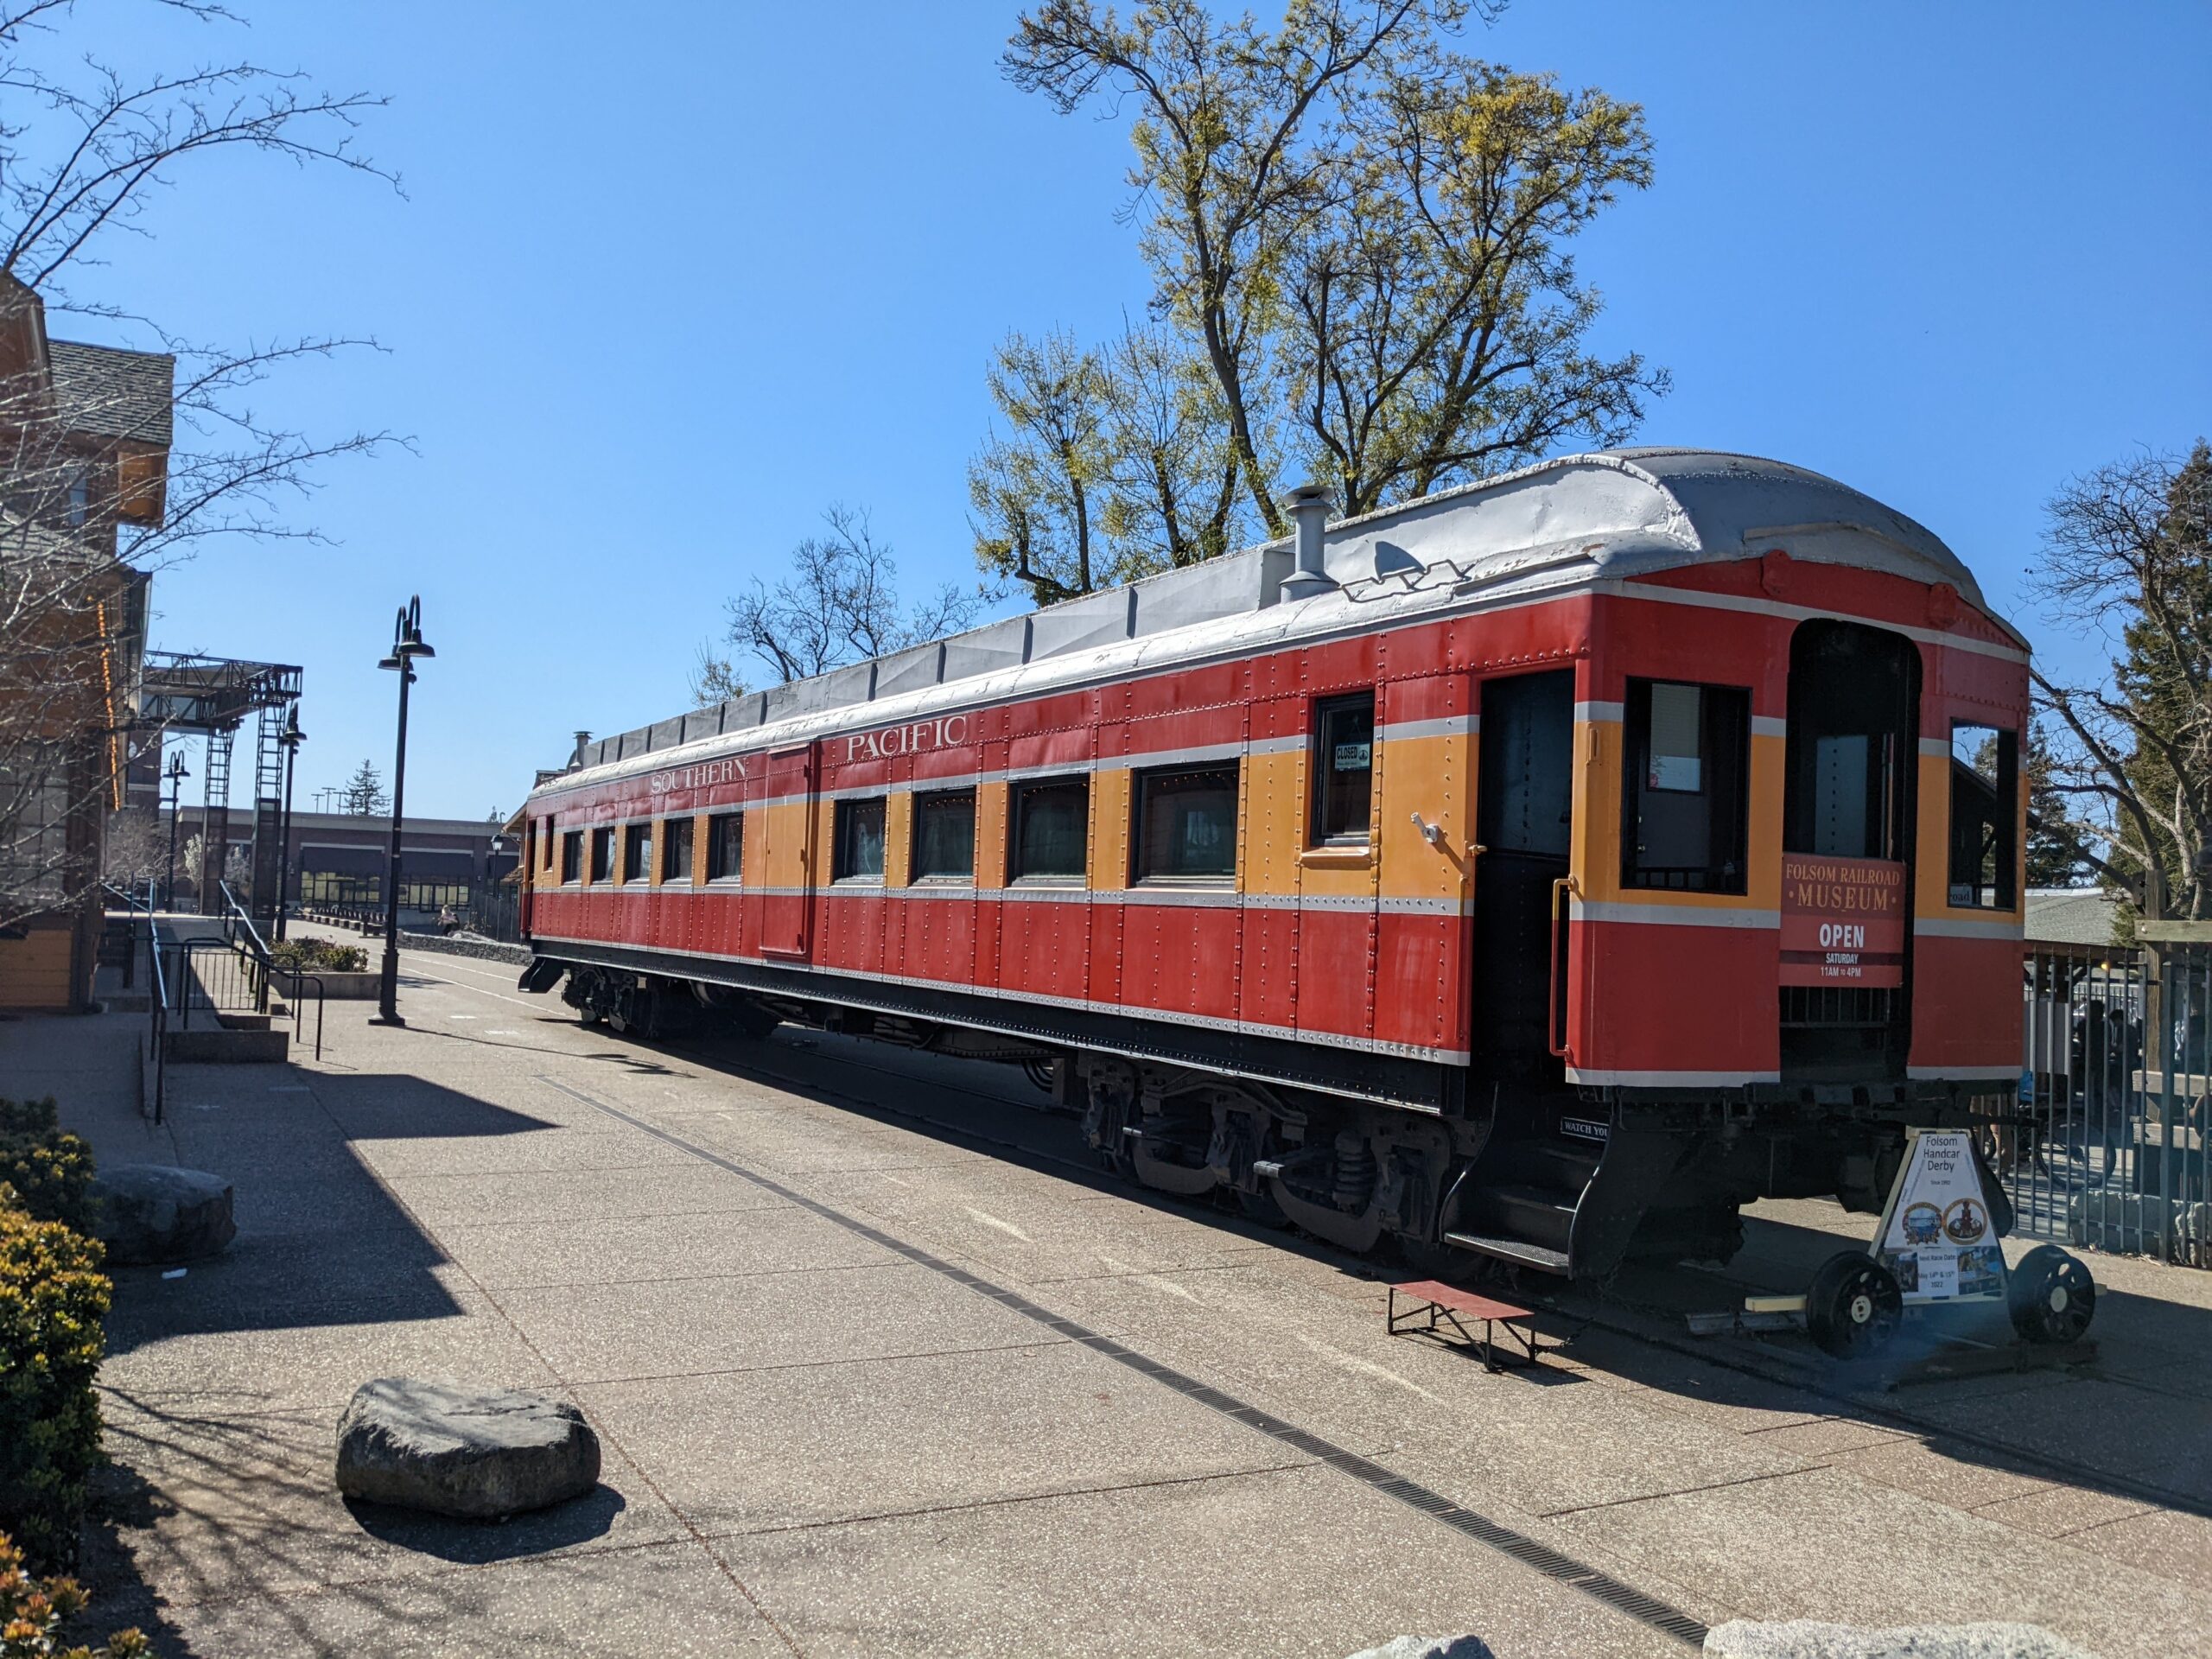 Southern Pacific Rail car at Folsom Railroad Museum